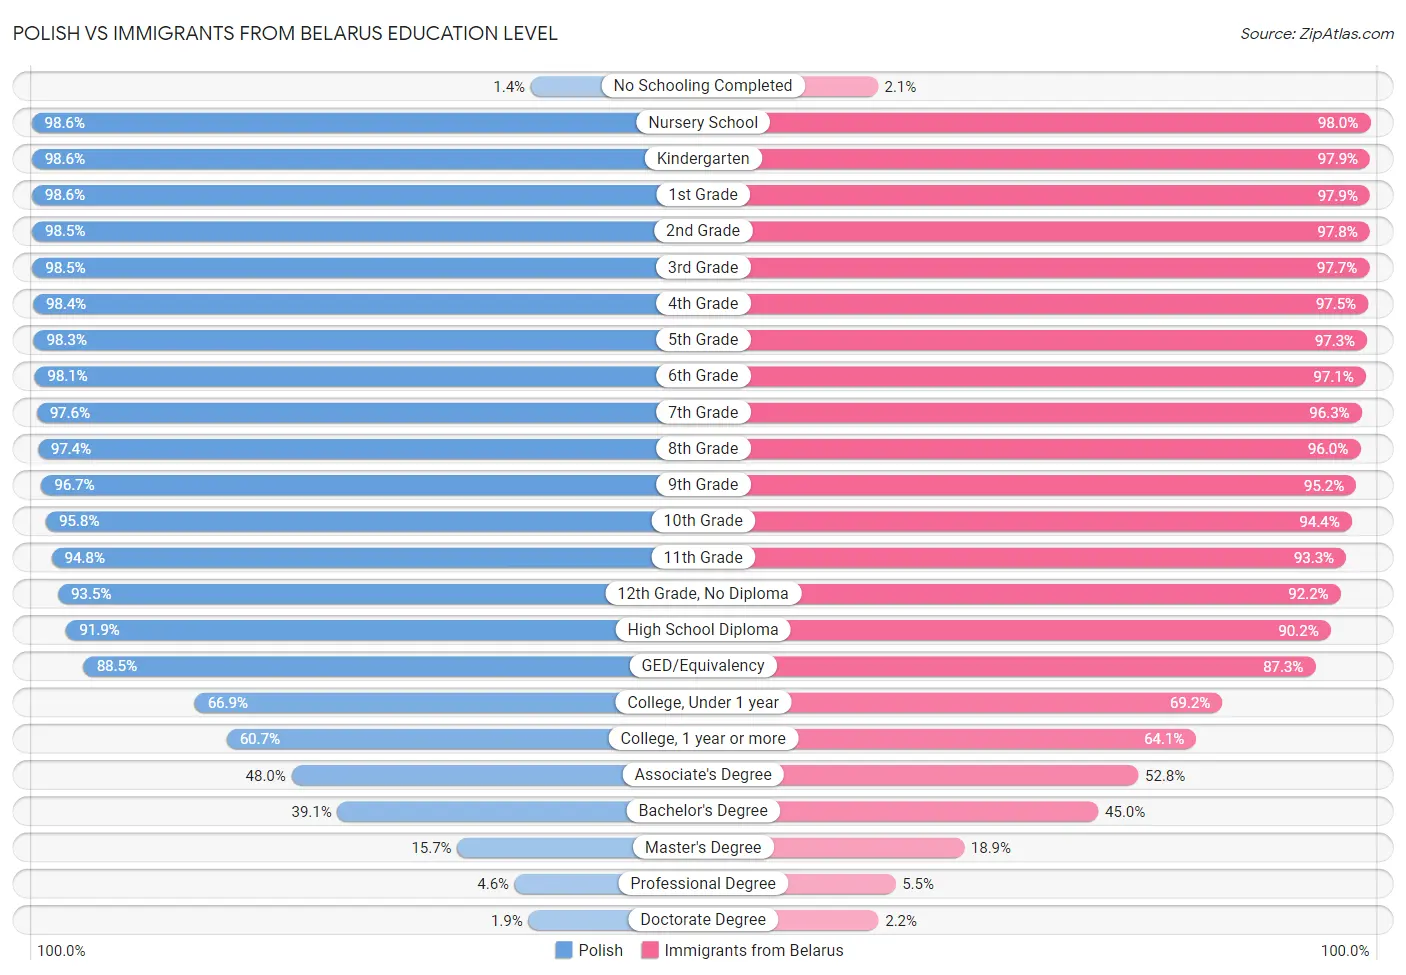 Polish vs Immigrants from Belarus Education Level